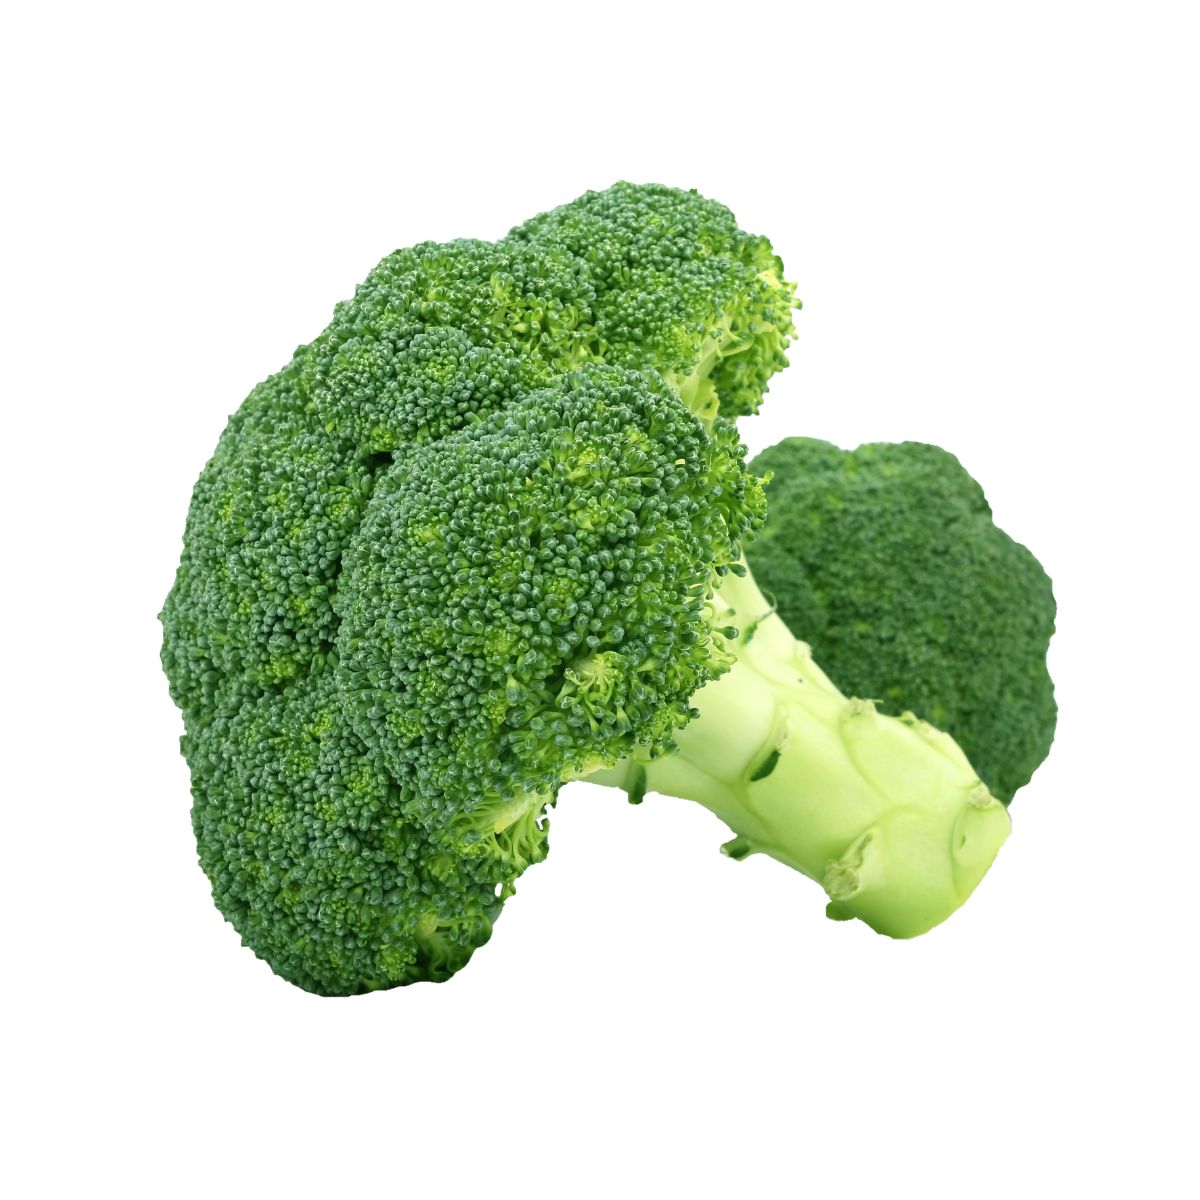 Broccoli - Seminte de broccoli Calabrese, 2 grame, hectarul.ro